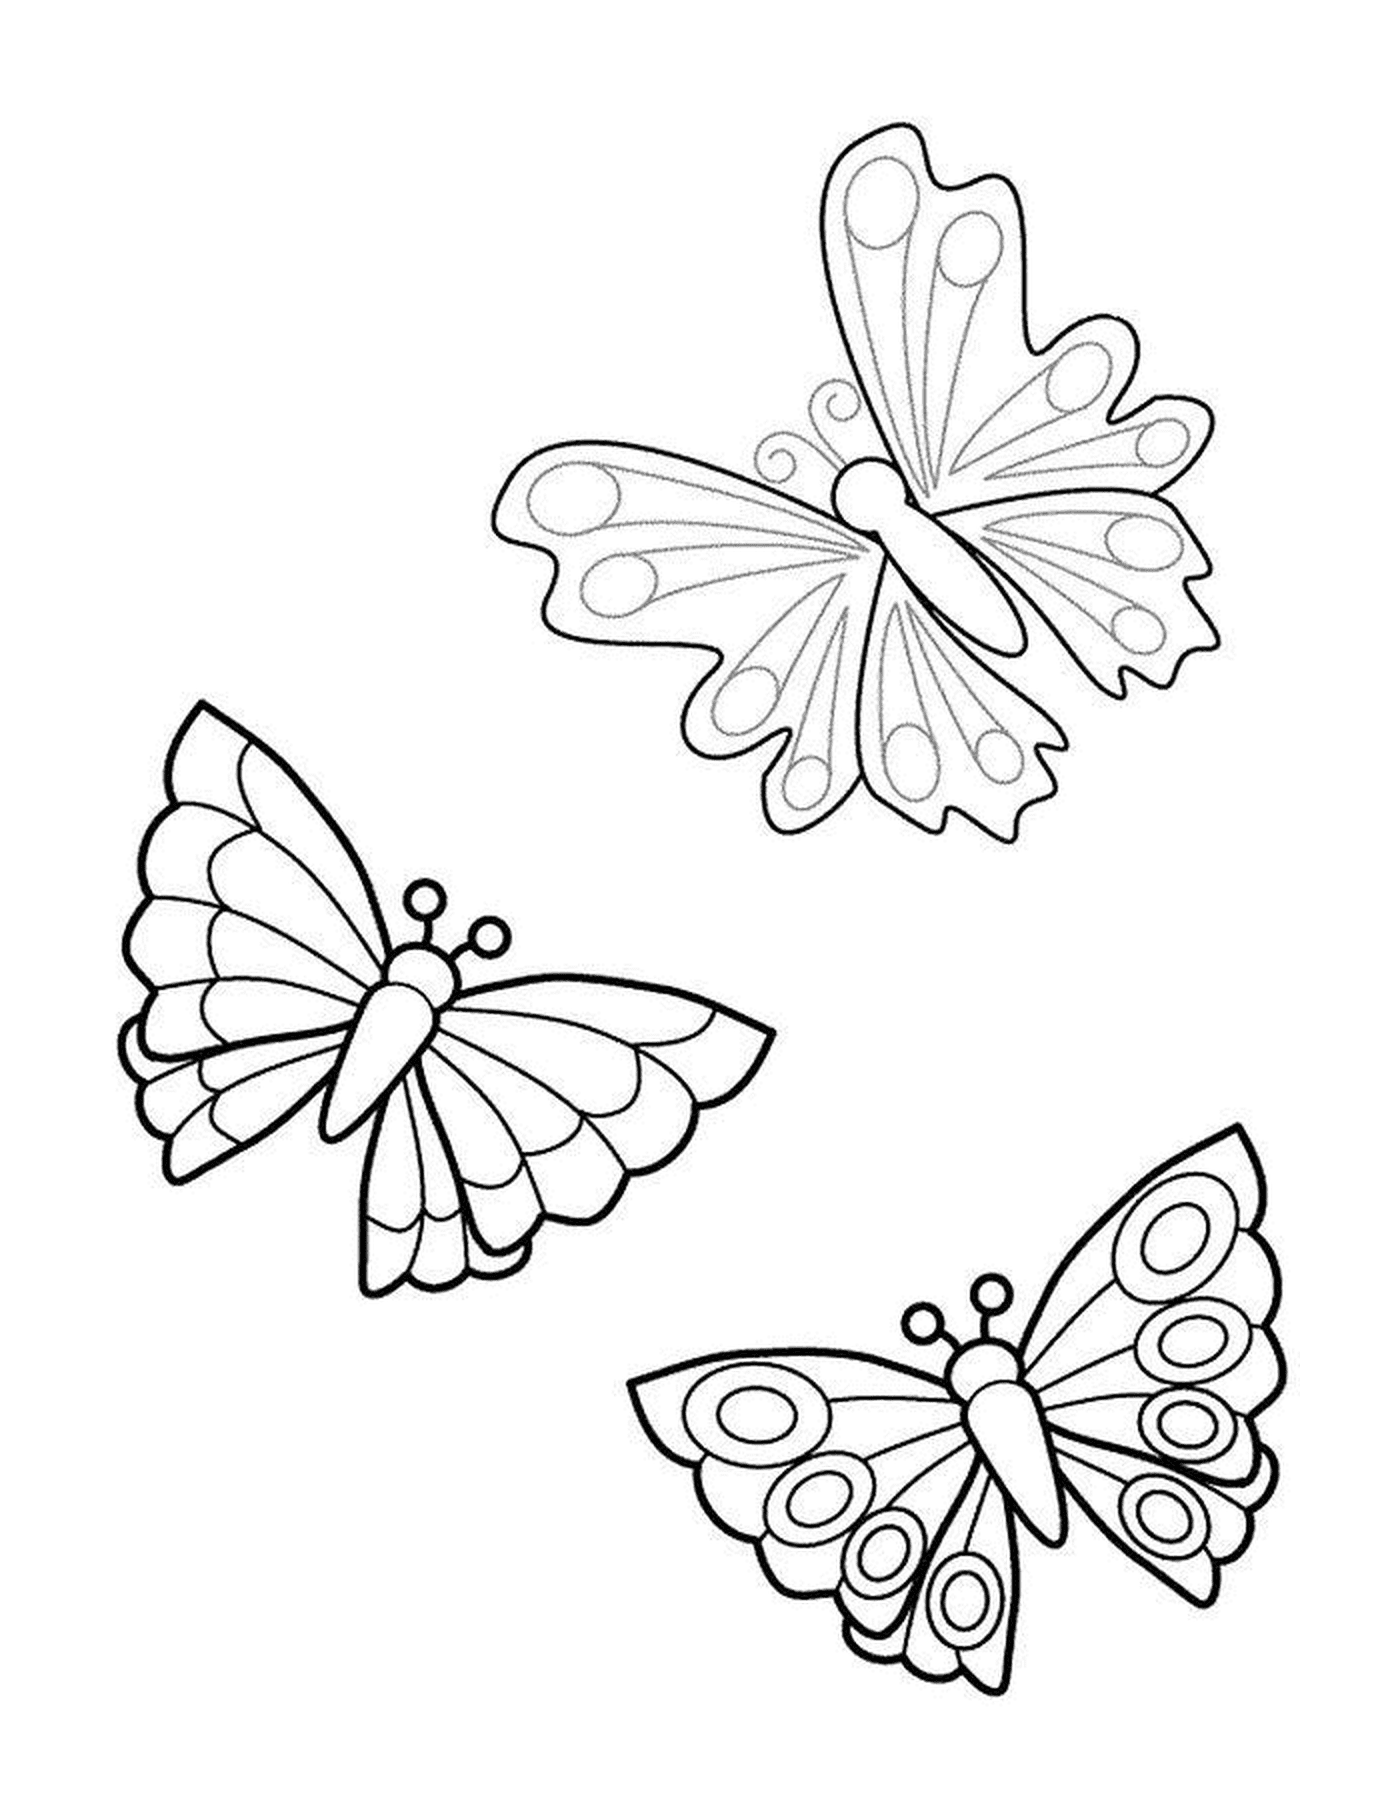  trio de mariposas voladoras 